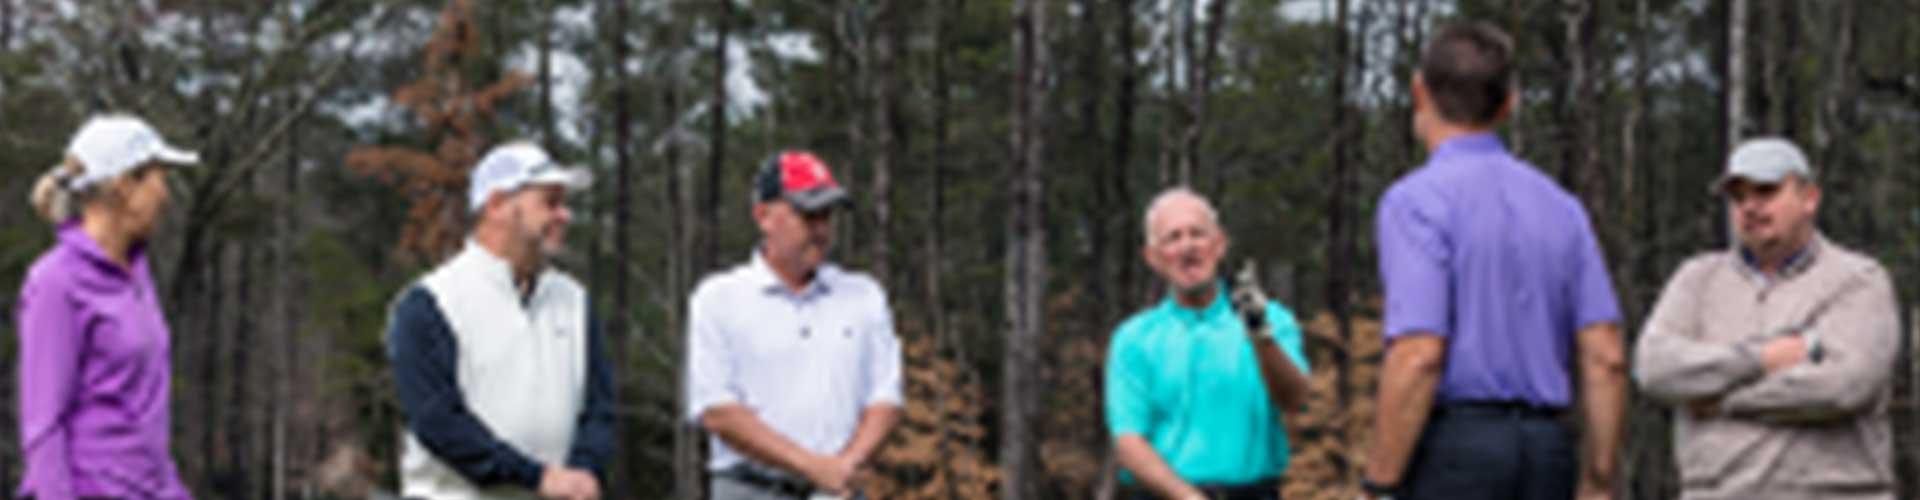 Practice Range at The Golf Club of Georgia